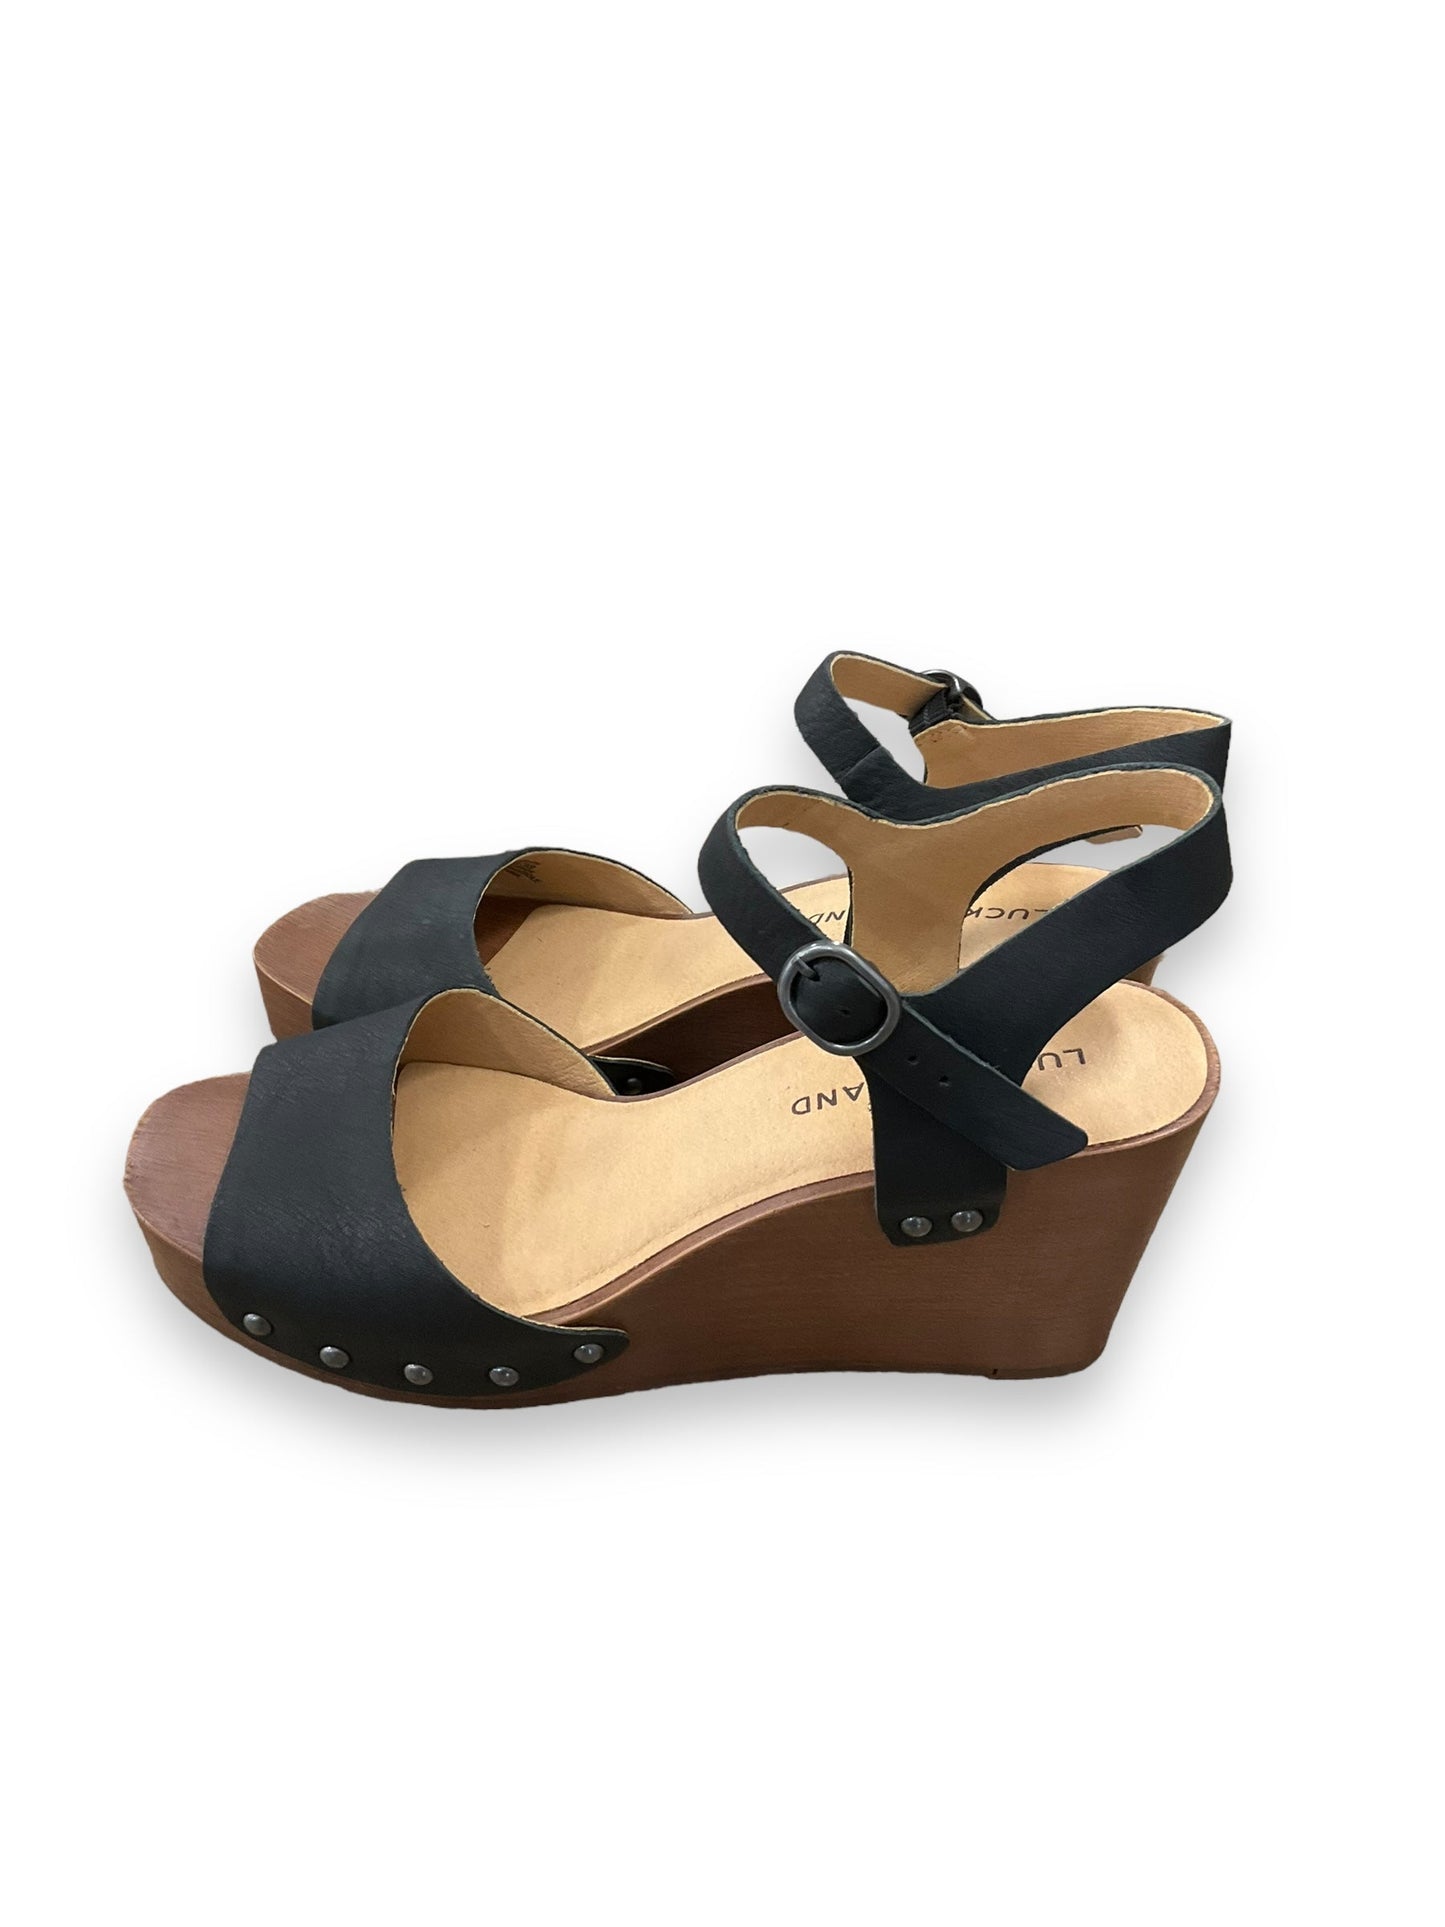 Black Sandals Heels Wedge Lucky Brand, Size 7.5